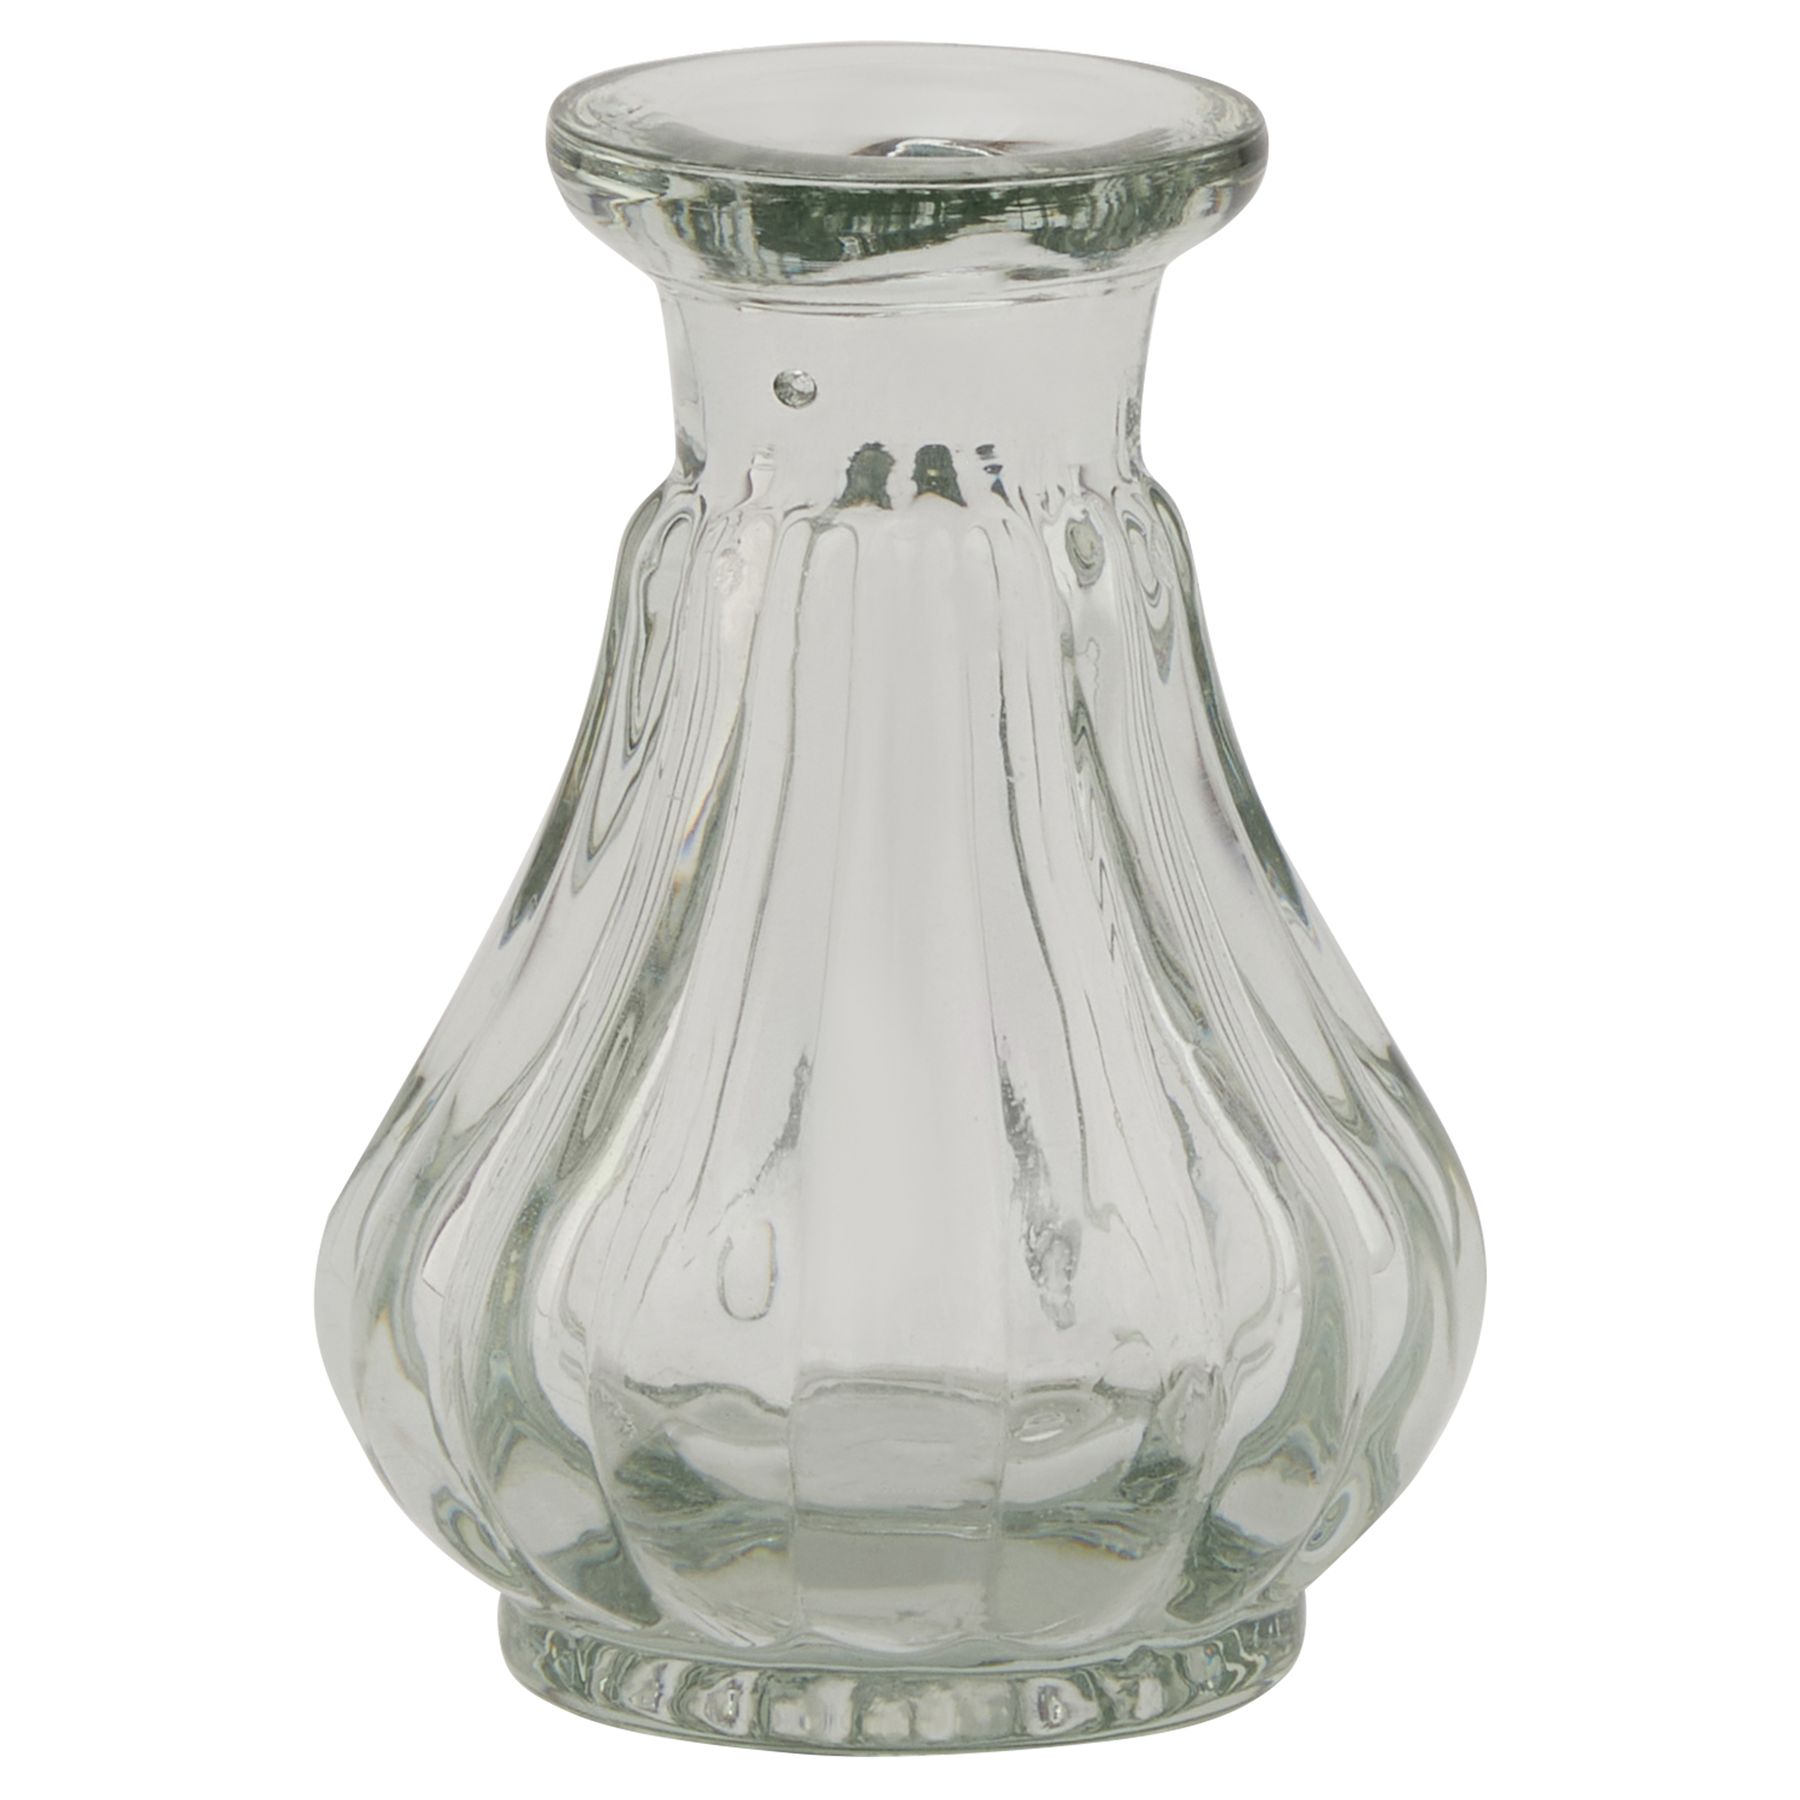 Batura Bud Vase Small - Image 1